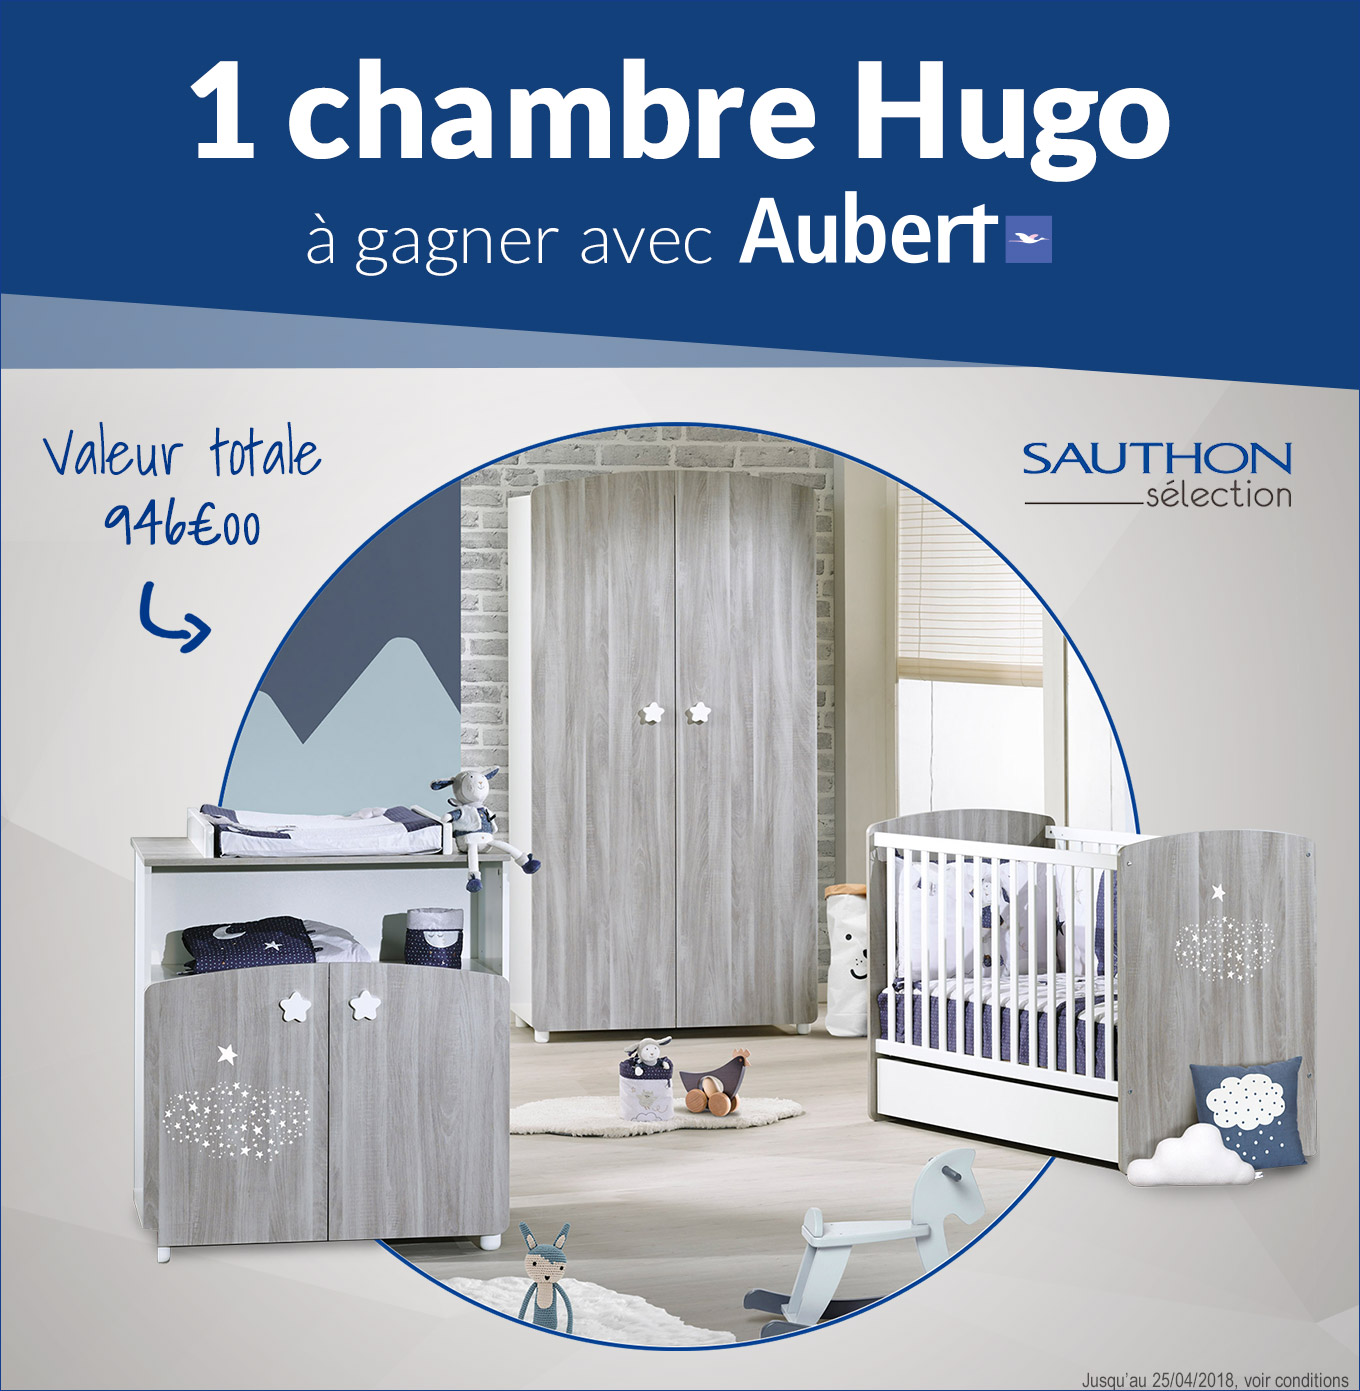 Aubert A Gagner 1 Chambre Hugo De Sauthon